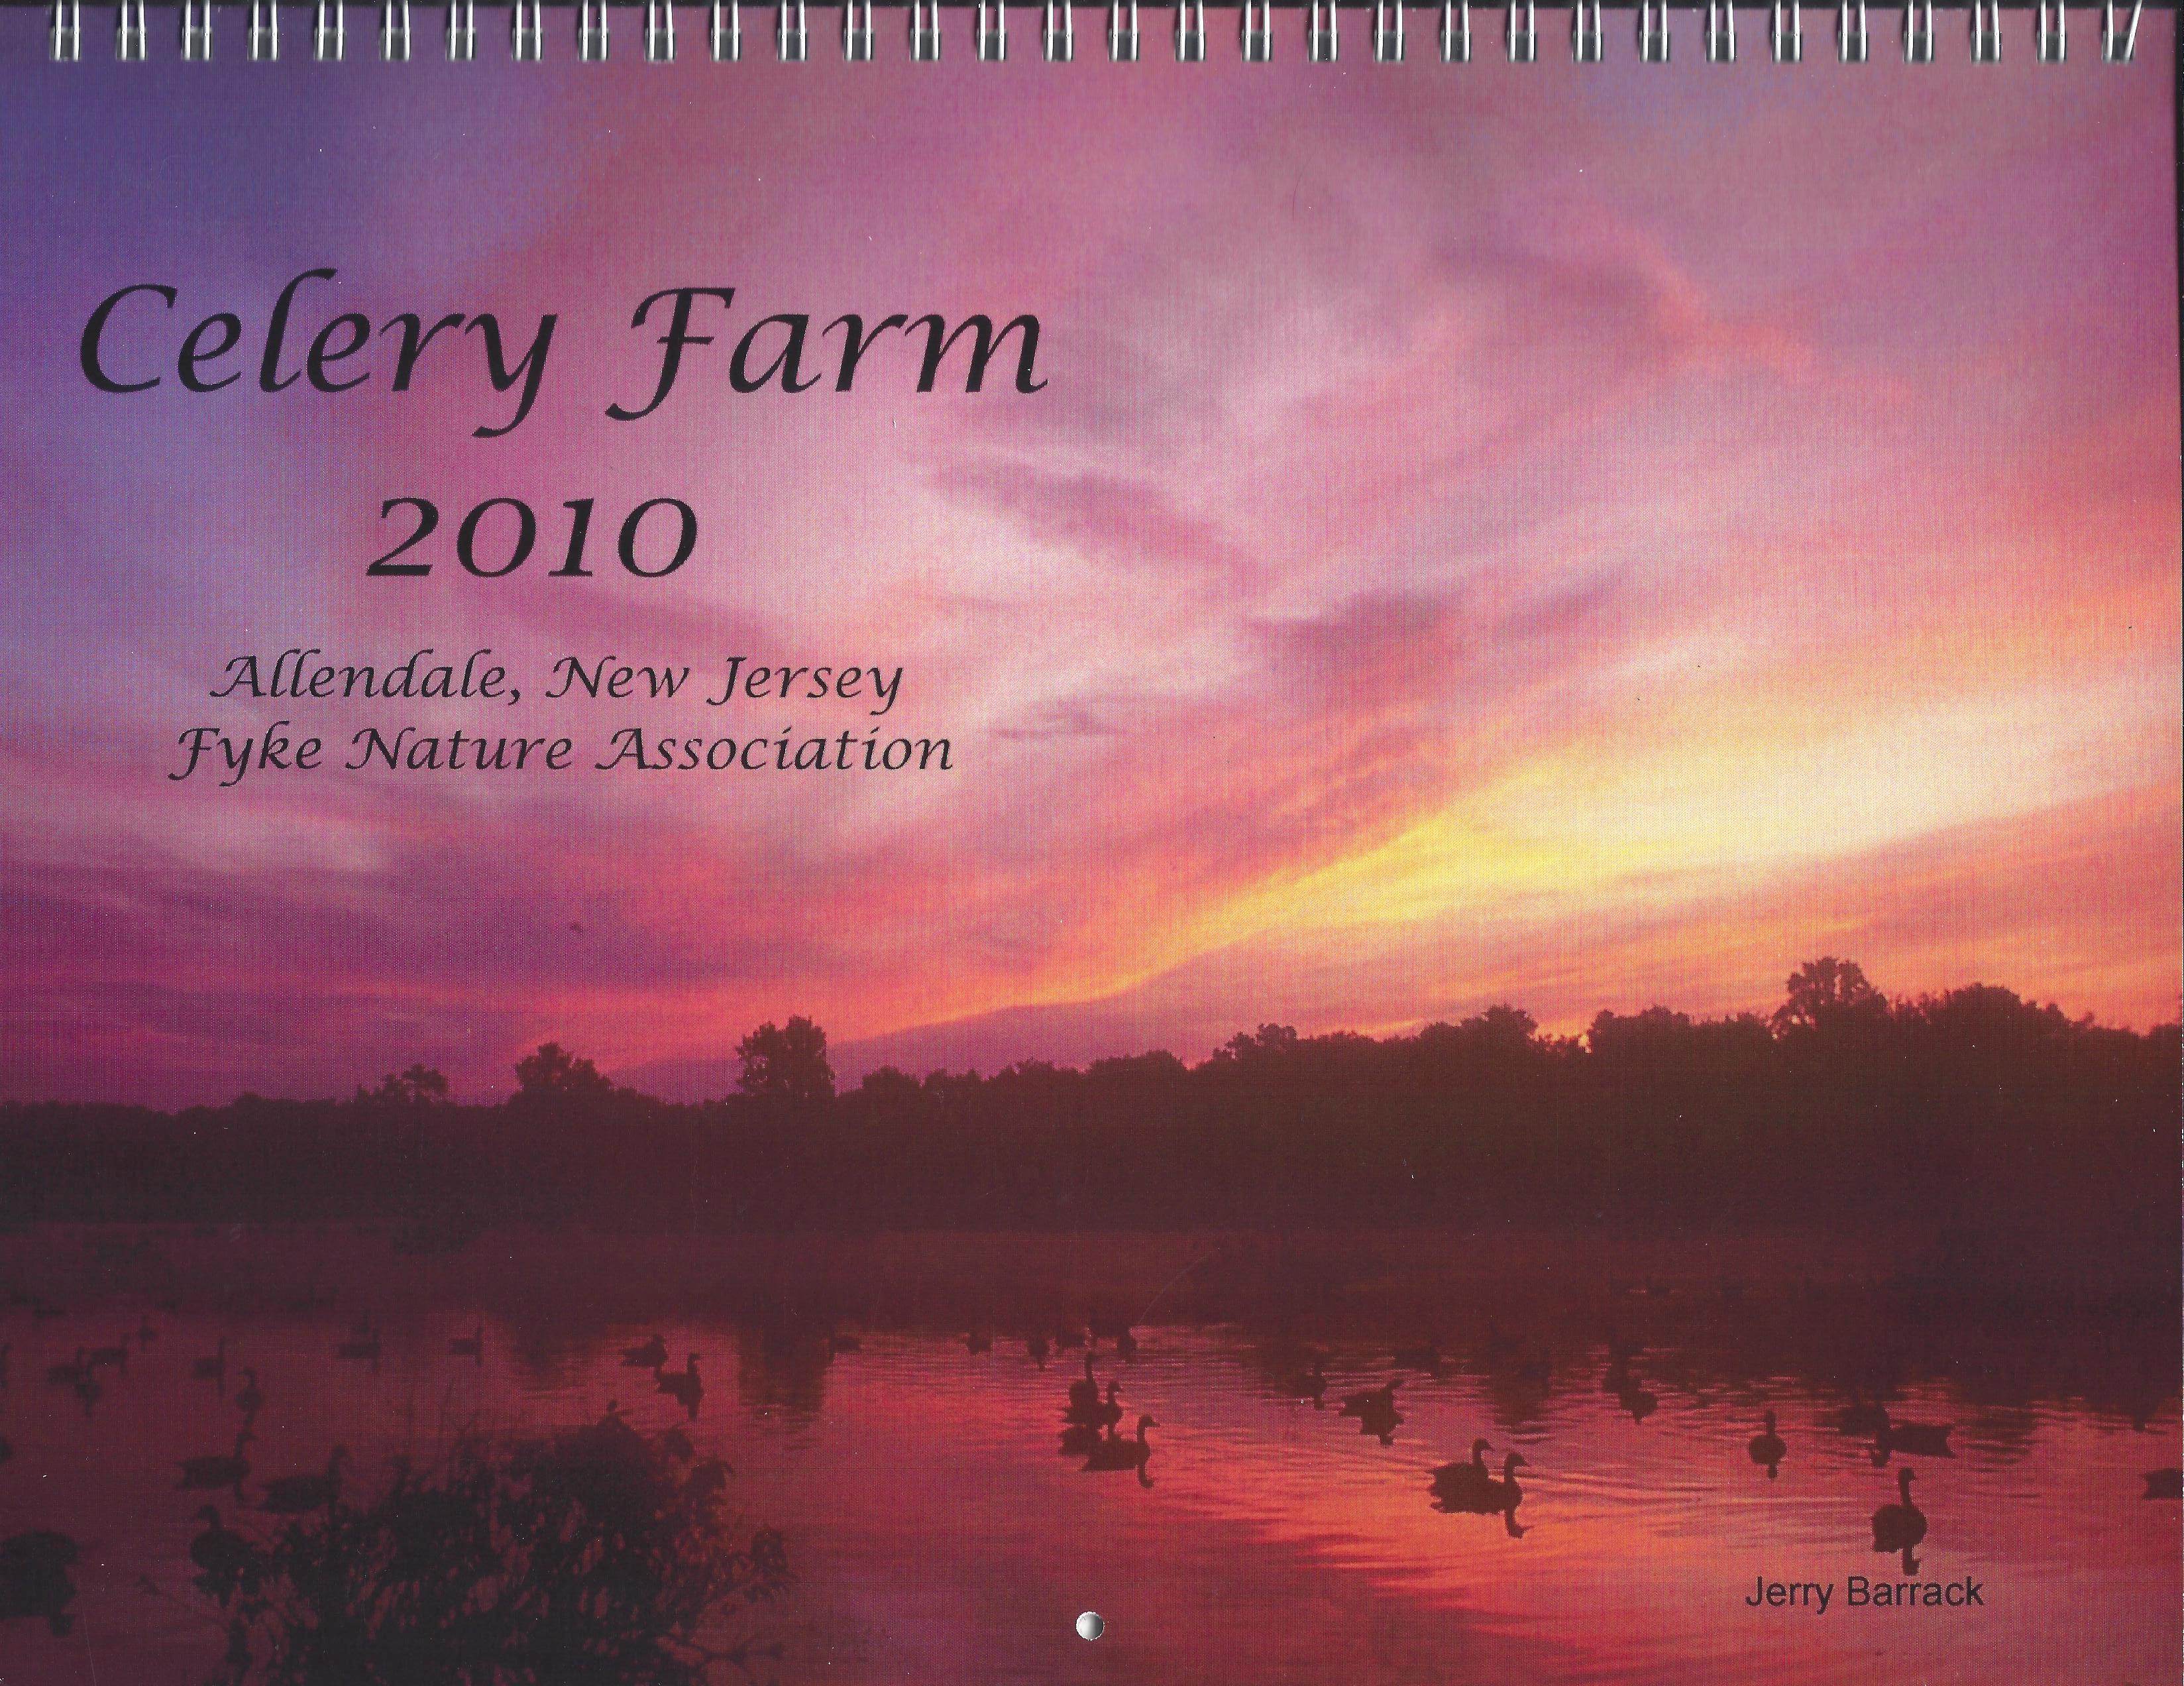 2008 Calendar